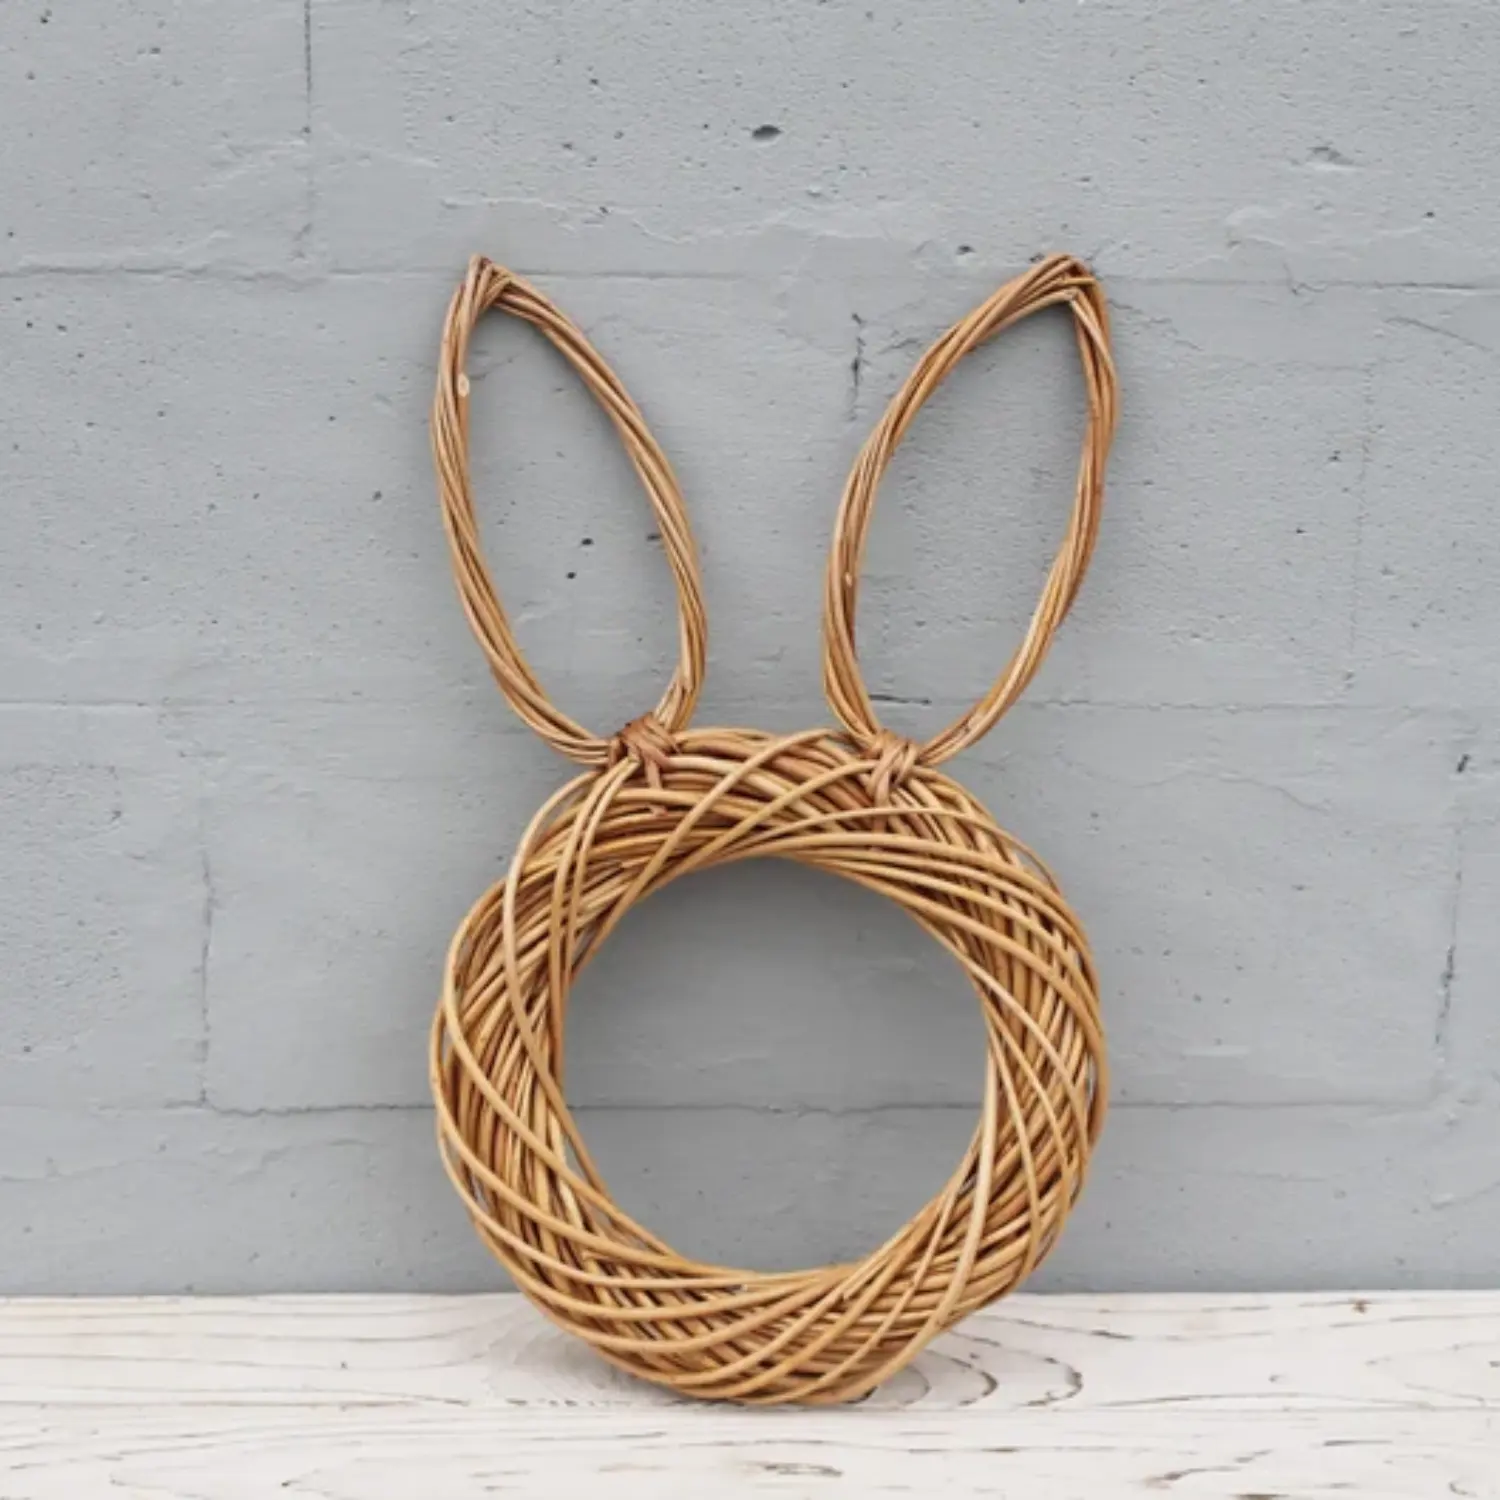 Newest design rattan Easter bunny wreath wicker Spring wreaths for front door wholesales from Vietnam